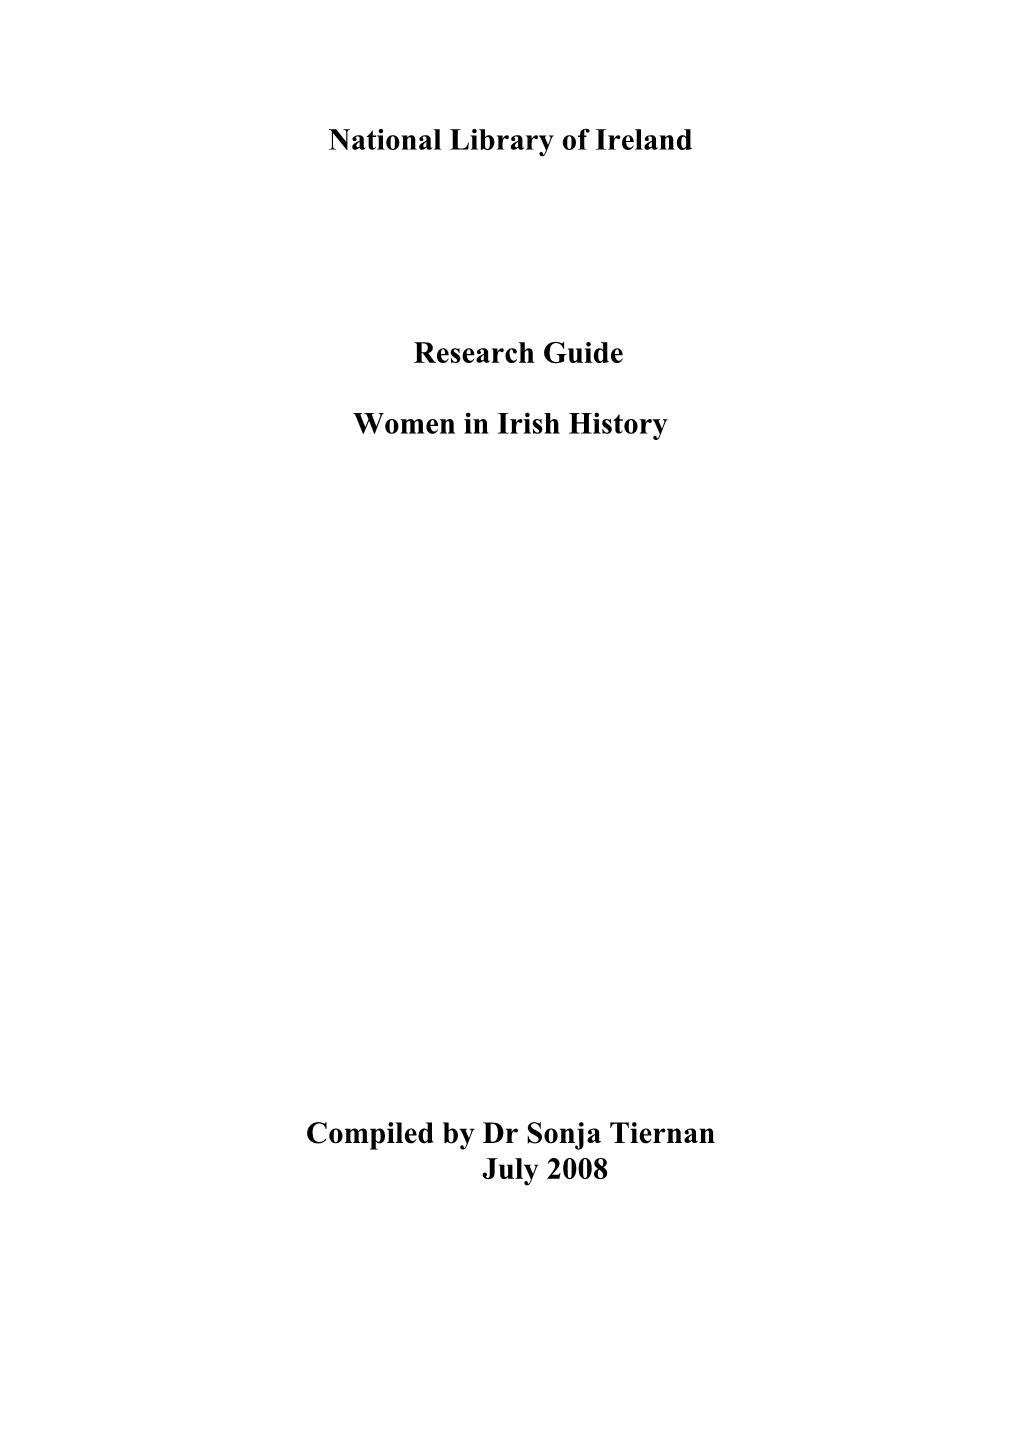 Women in Irish History Research Guide